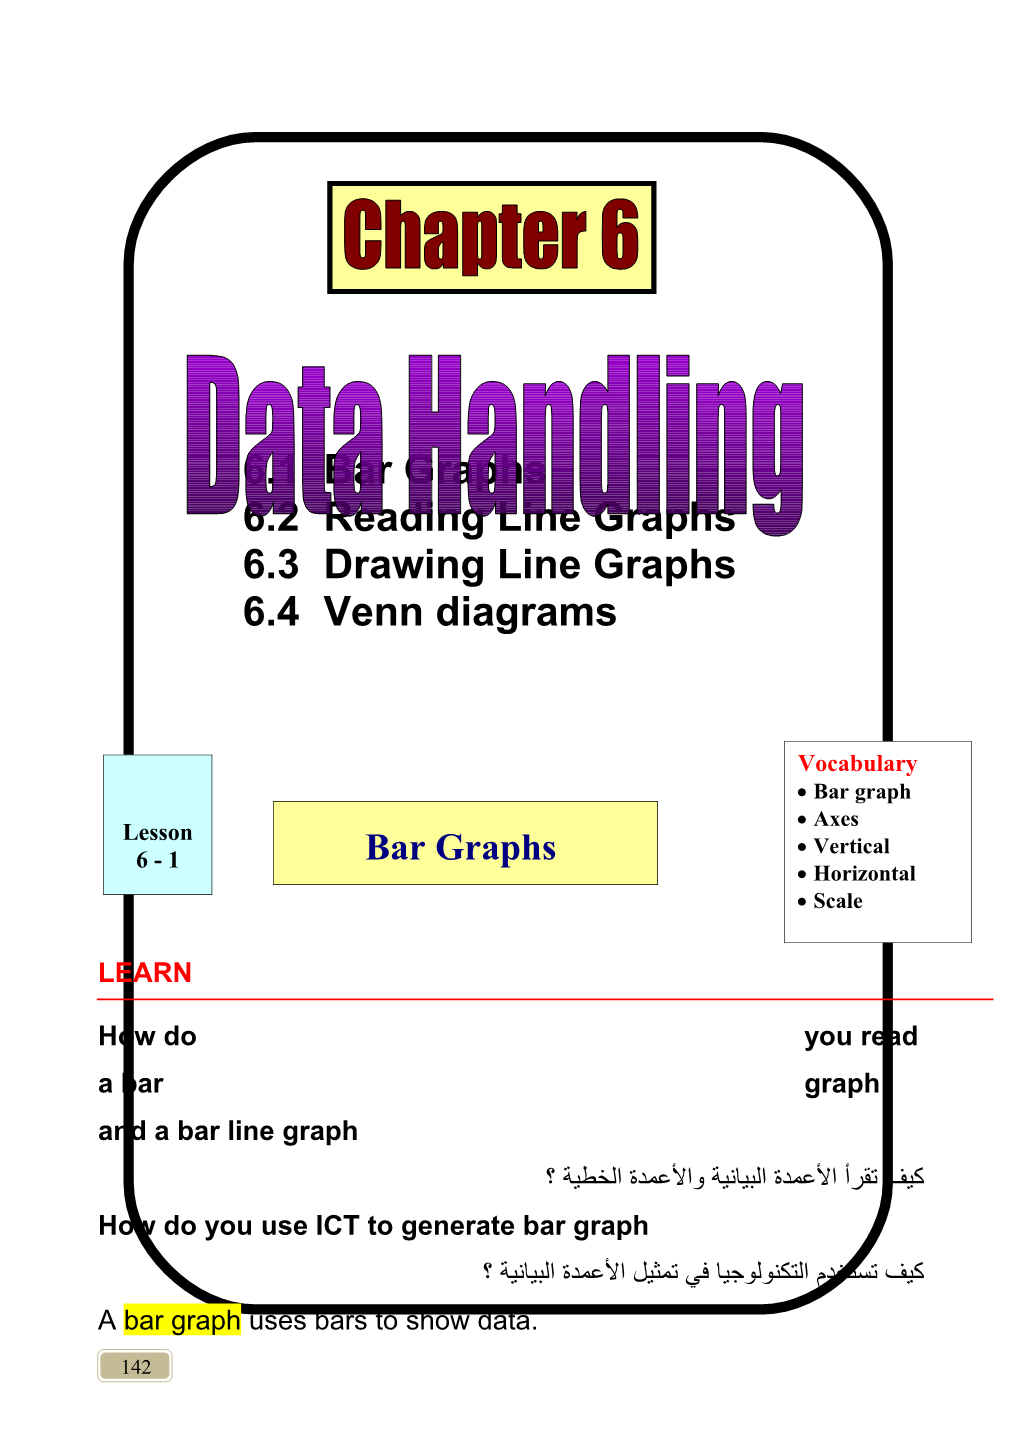 How Do You Read a Bar Graph and a Bar Line Graph